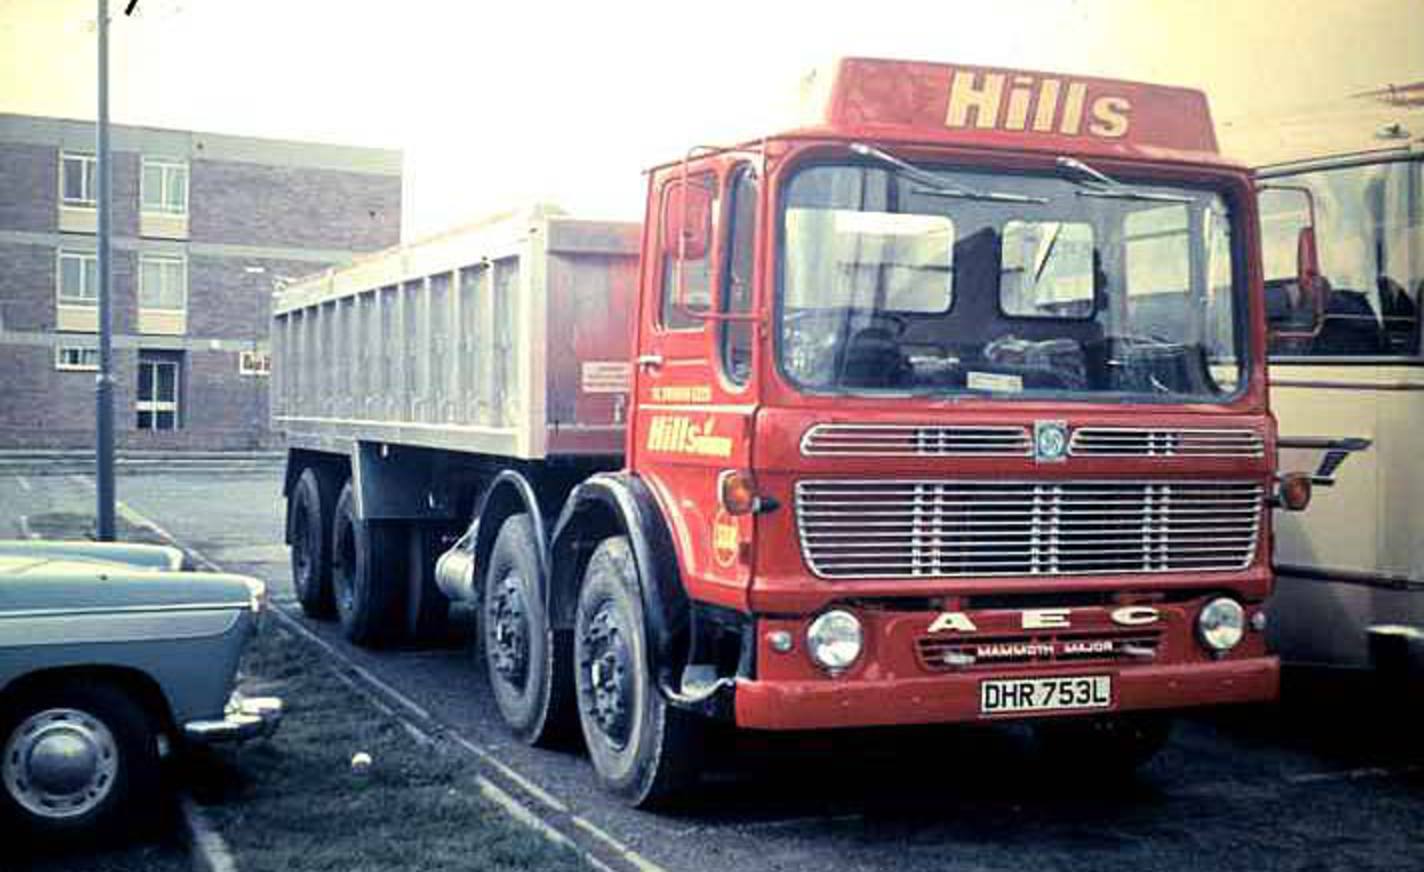 Truck Photos - Hills of Swindon AEC Mammoth Major 8X4 Tipper